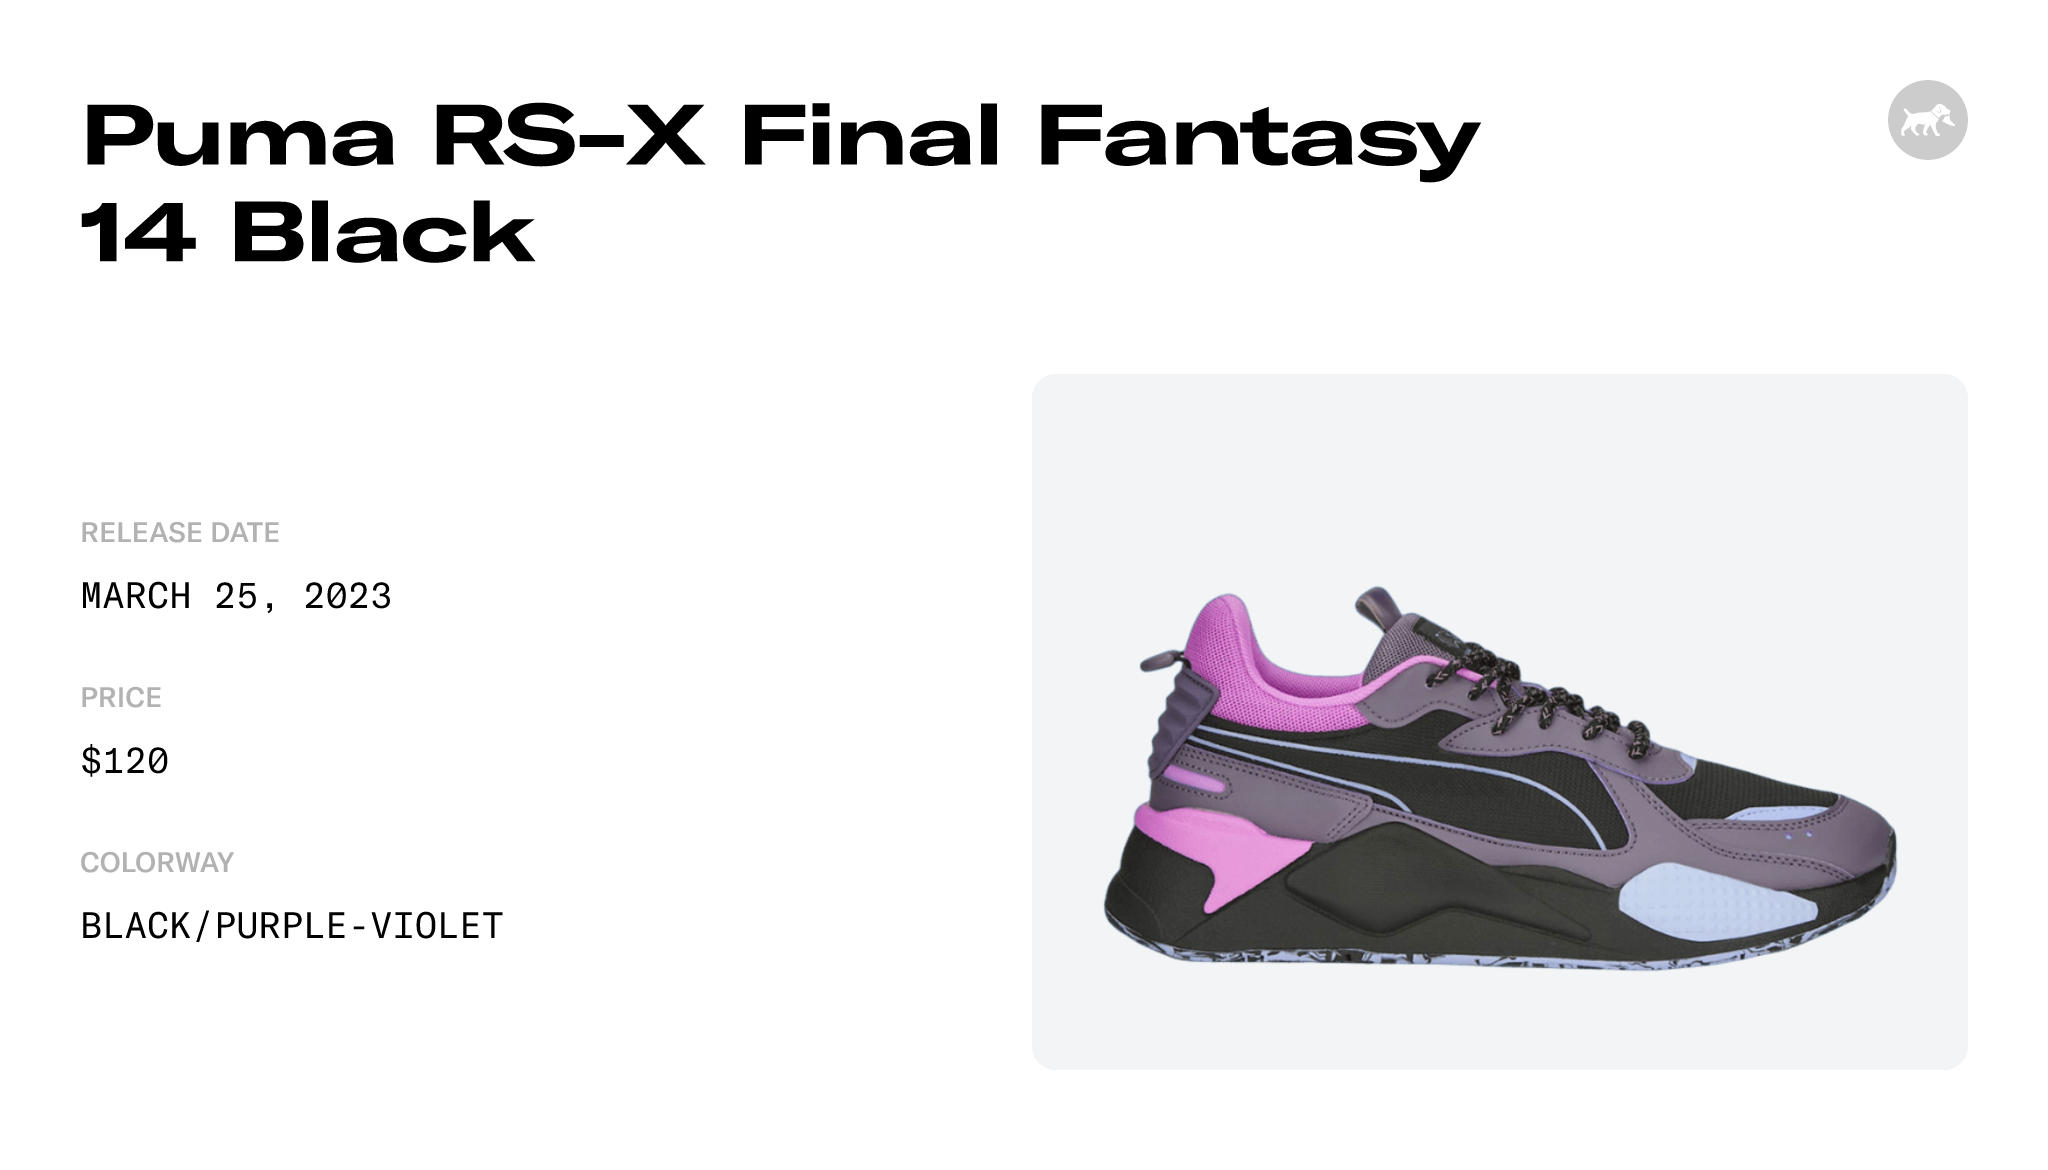 Puma RS-X Final Fantasy 14 Black - 307601-01 Raffles and Release Date